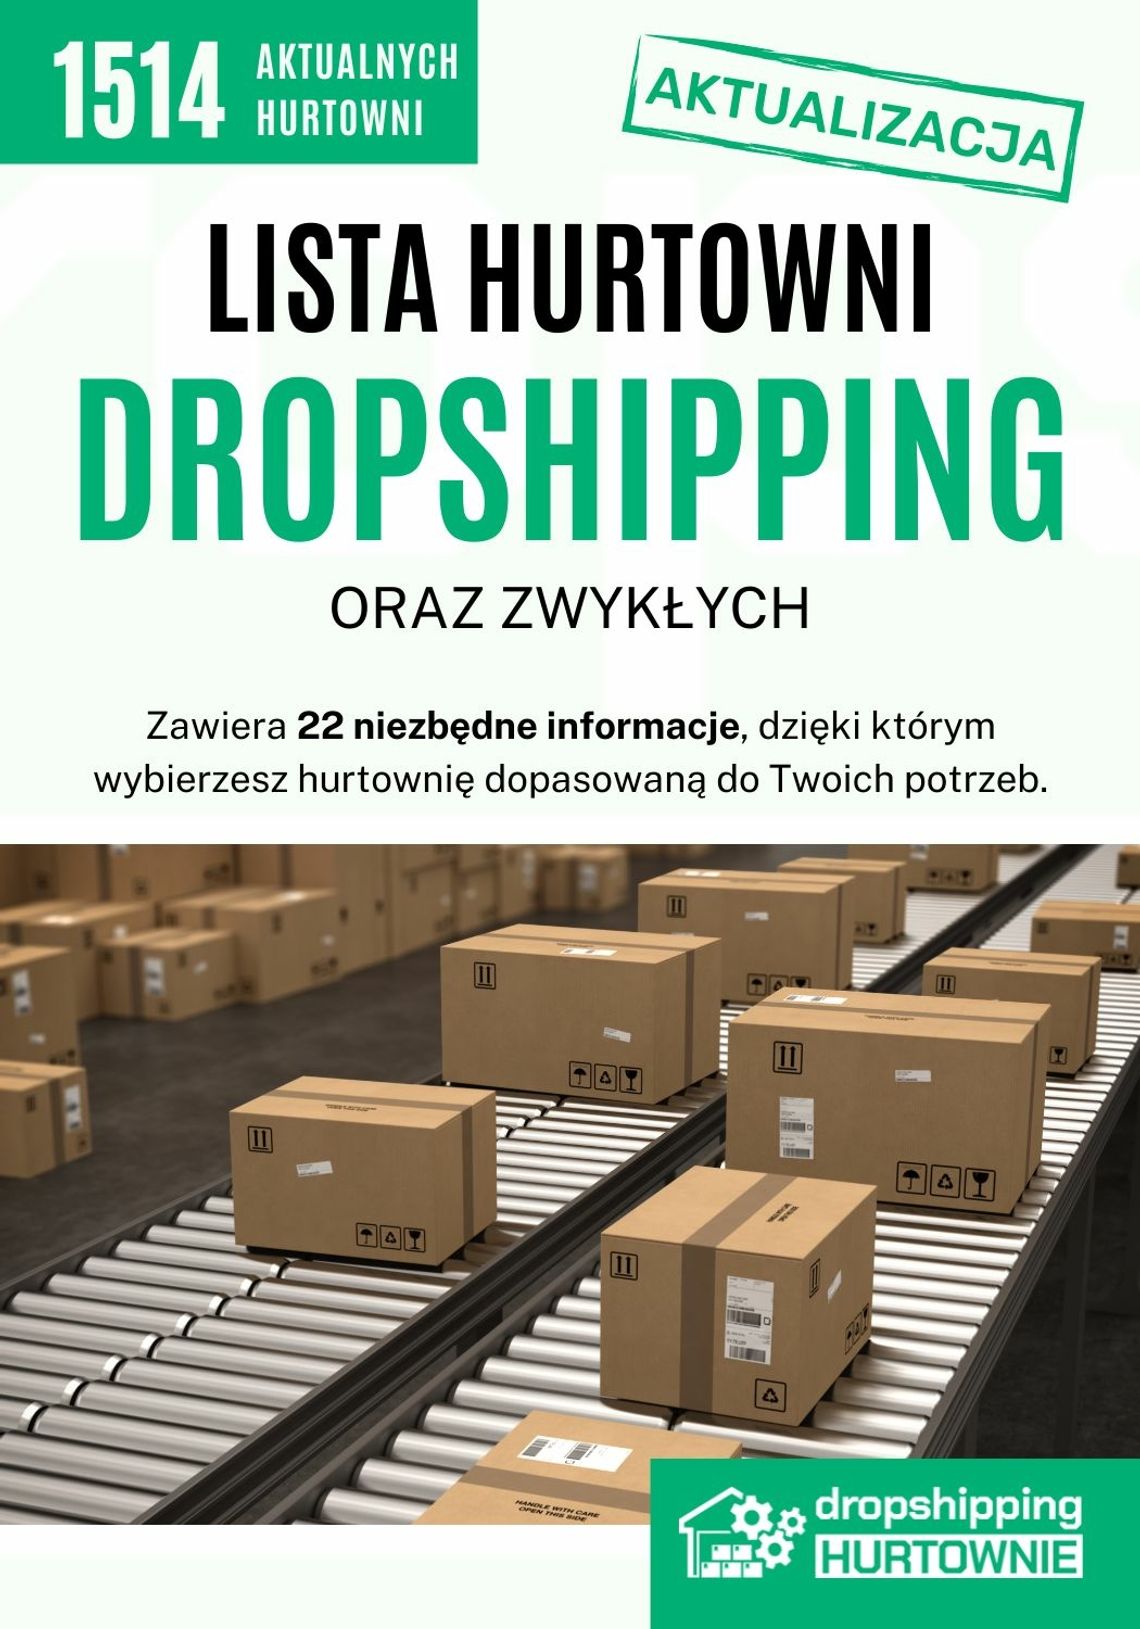 Dropshipping - lista hurtowni